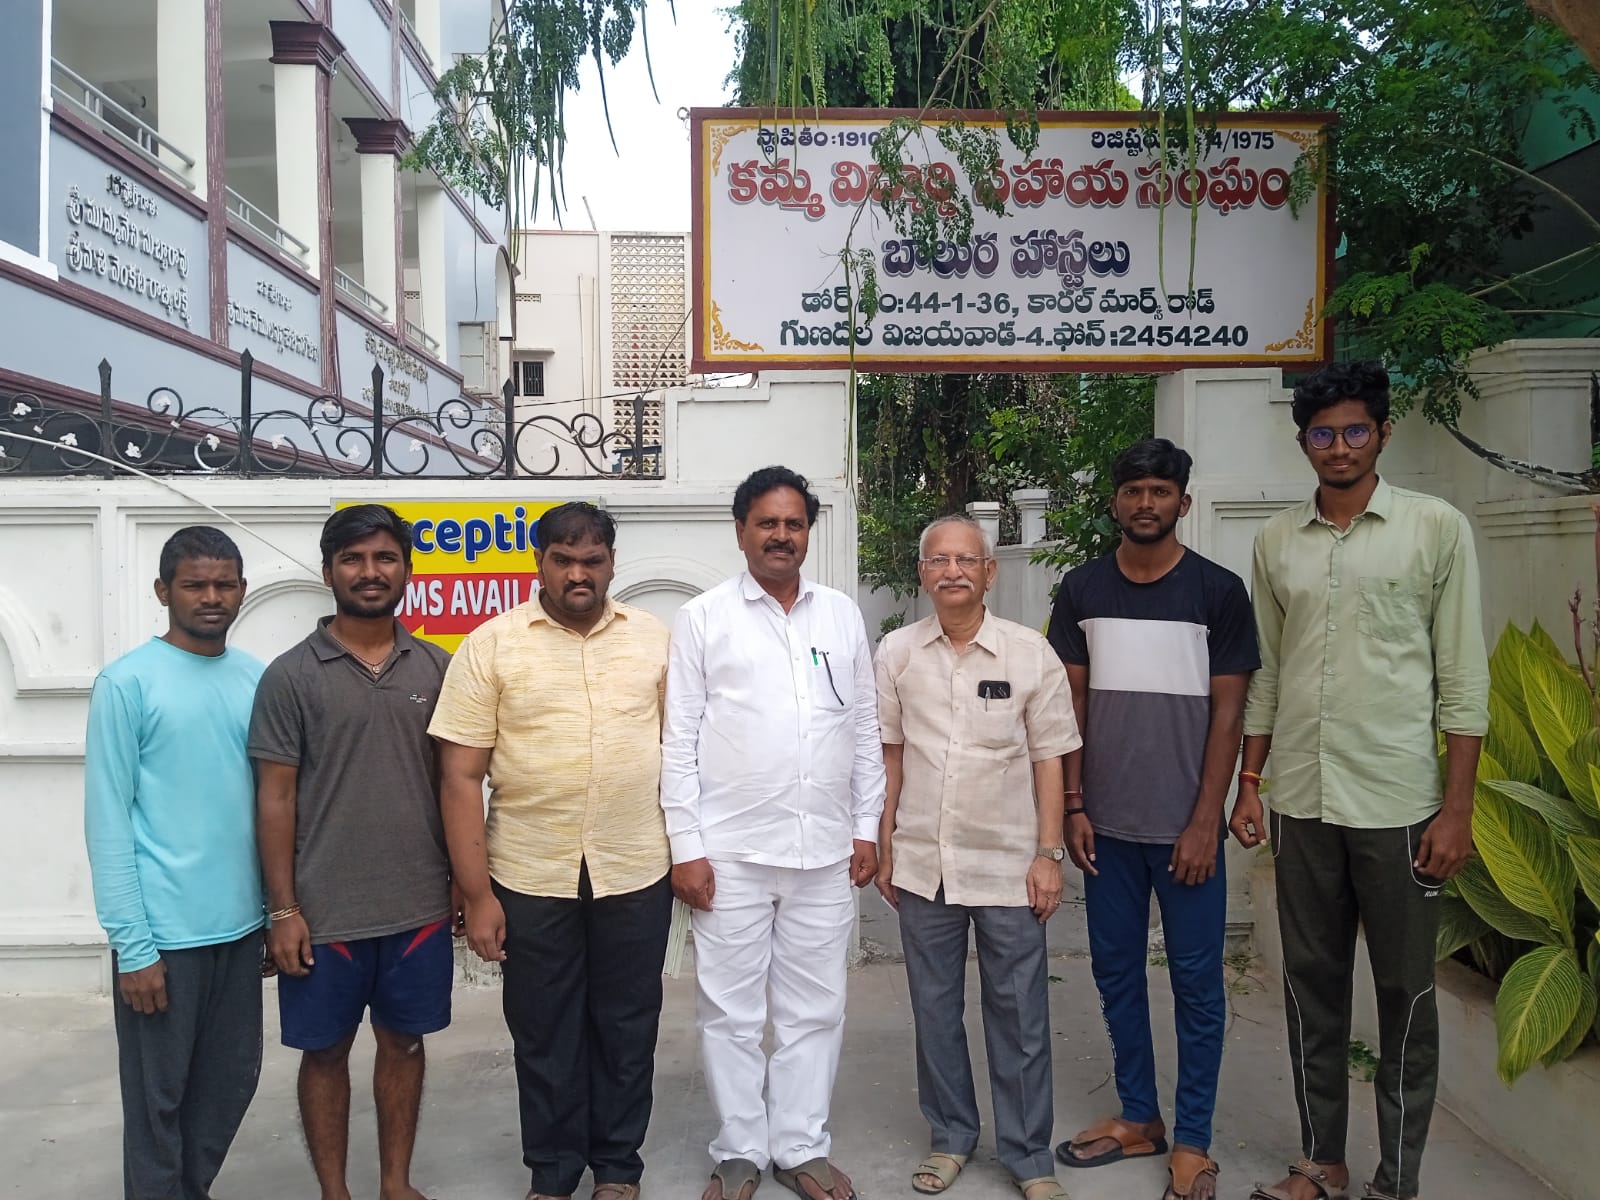 kadapa kamma sangham members visited our hostel